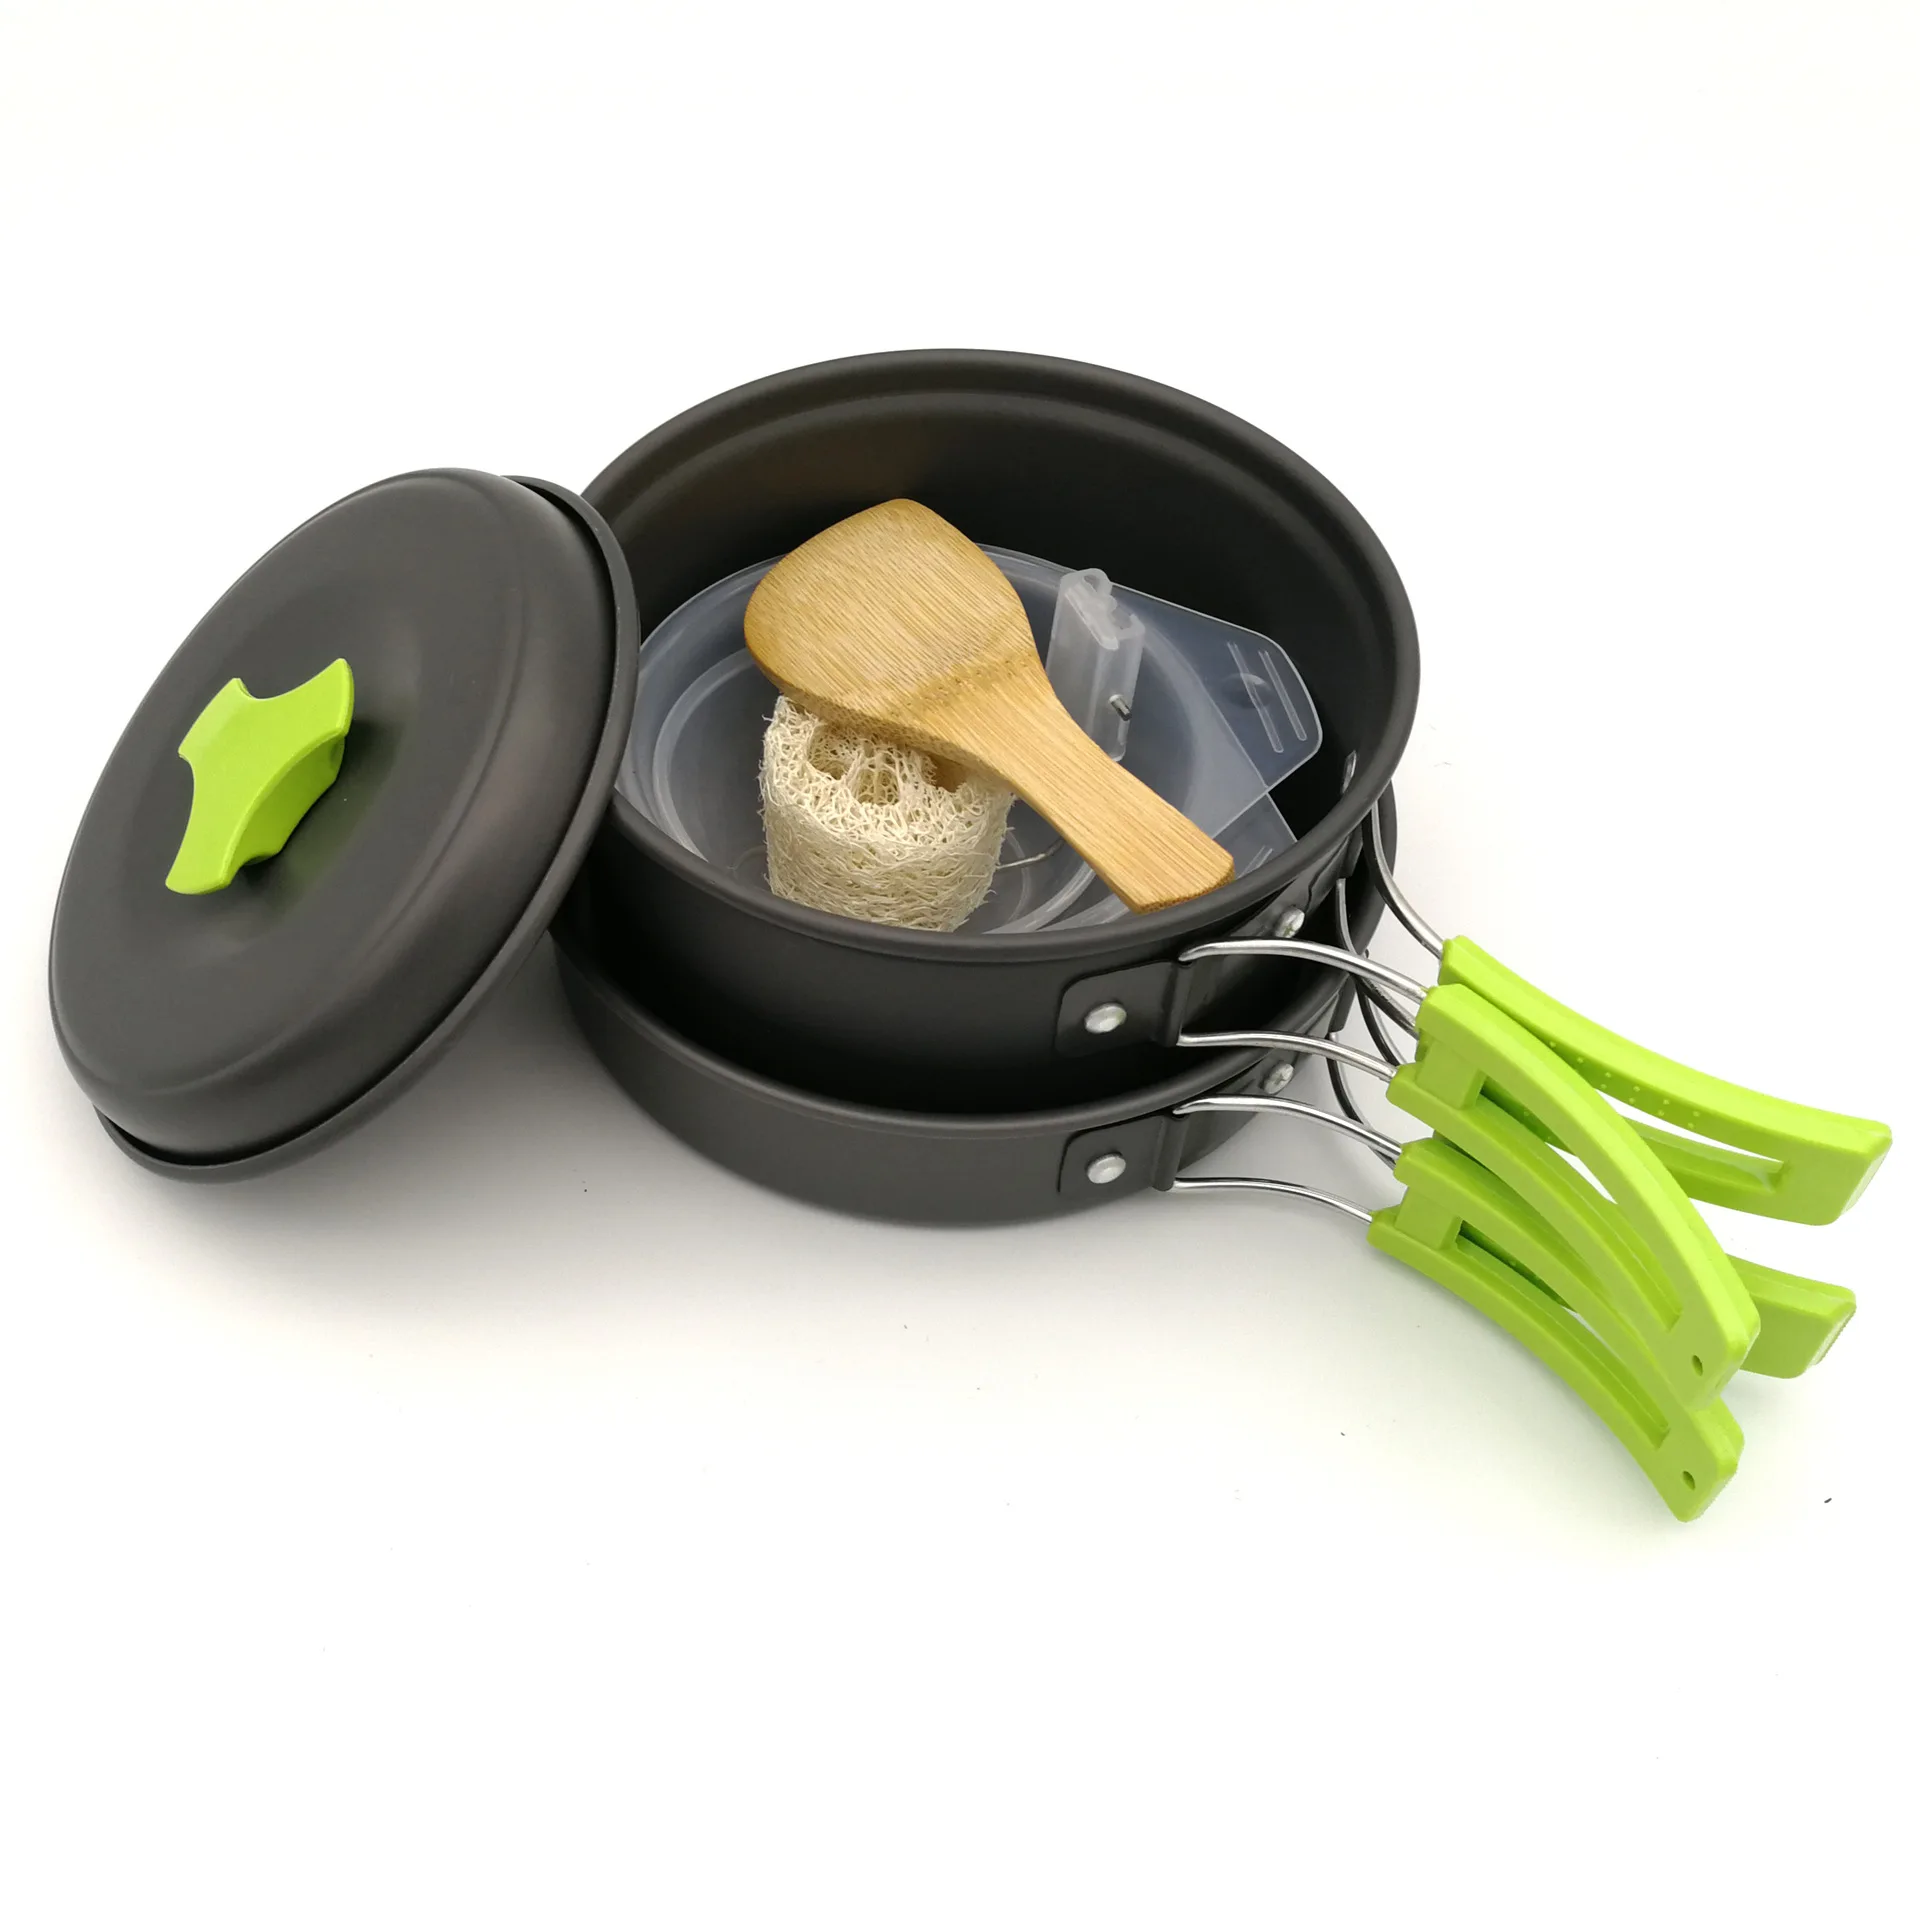 https://ae01.alicdn.com/kf/H853d13b3b5d743ff8a1399282a3a8629U/Camping-equipment-Cookware-cookingset-Survival-Outdoor-Nonstick-Portable-Tableware-Kettle-Pot-Pan-Bowl-Hiking-travel-BBQ.jpg